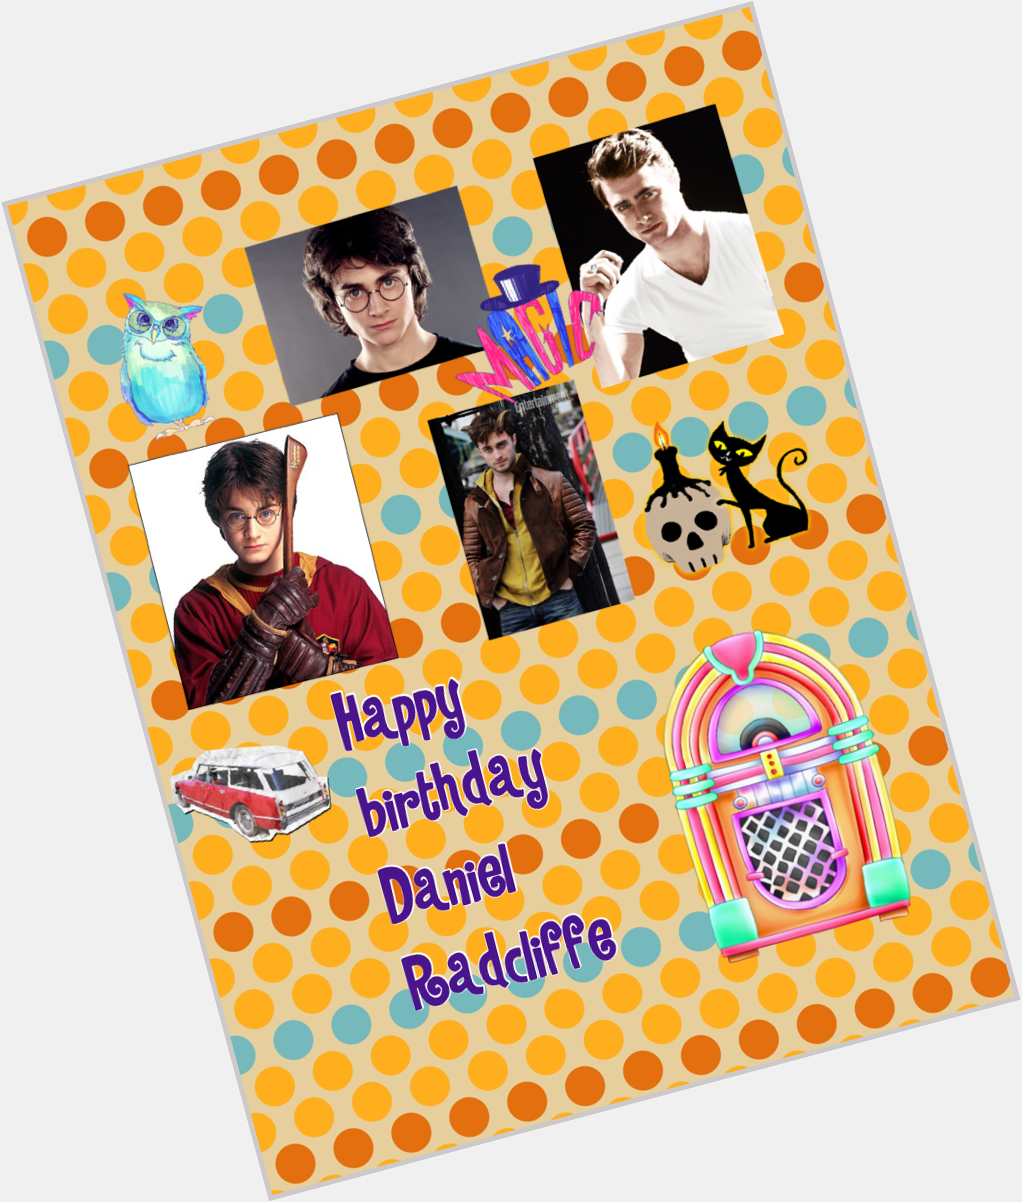 Happy birthday Daniel Radcliffe 